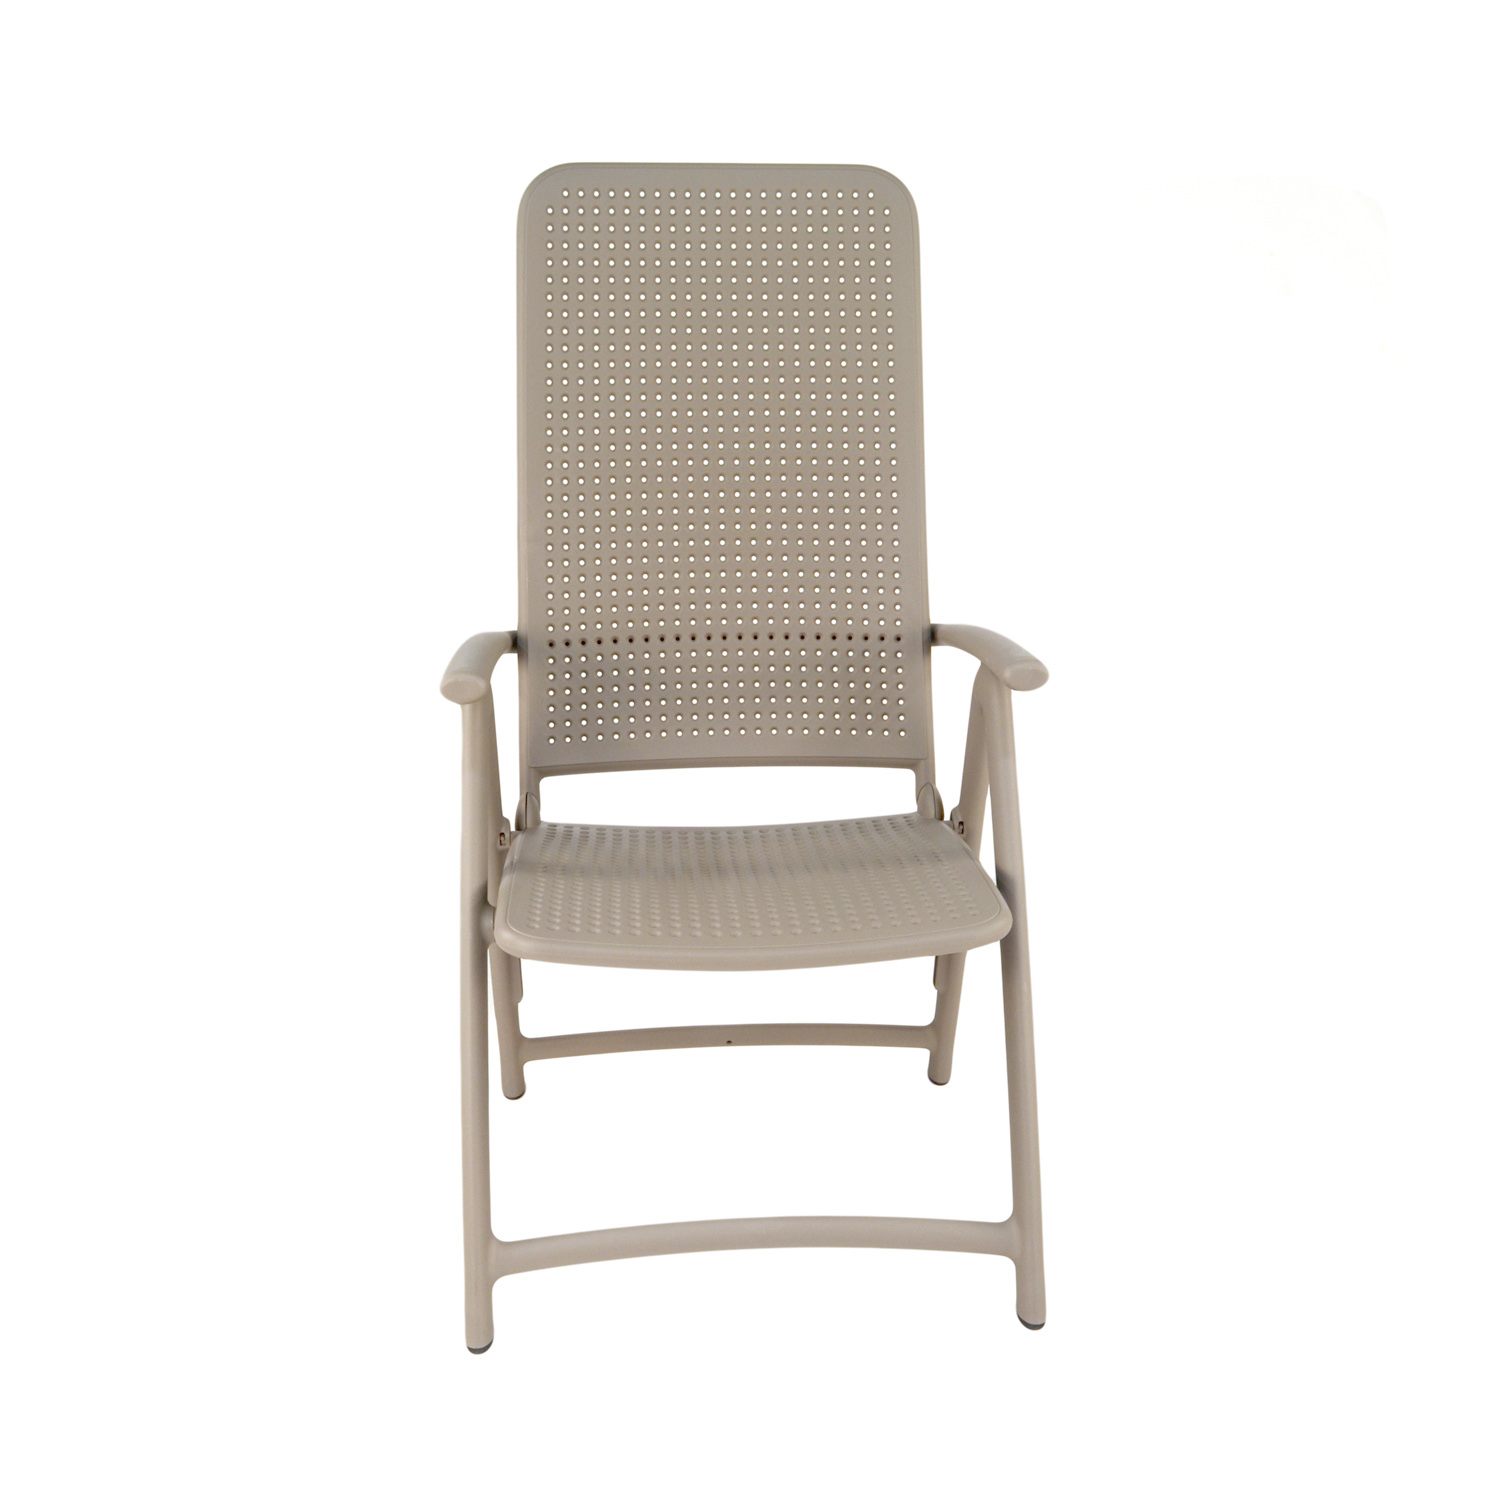 Nardi Darsena Recliner Chair in Turtle Dove Grey Chairs Nardi   